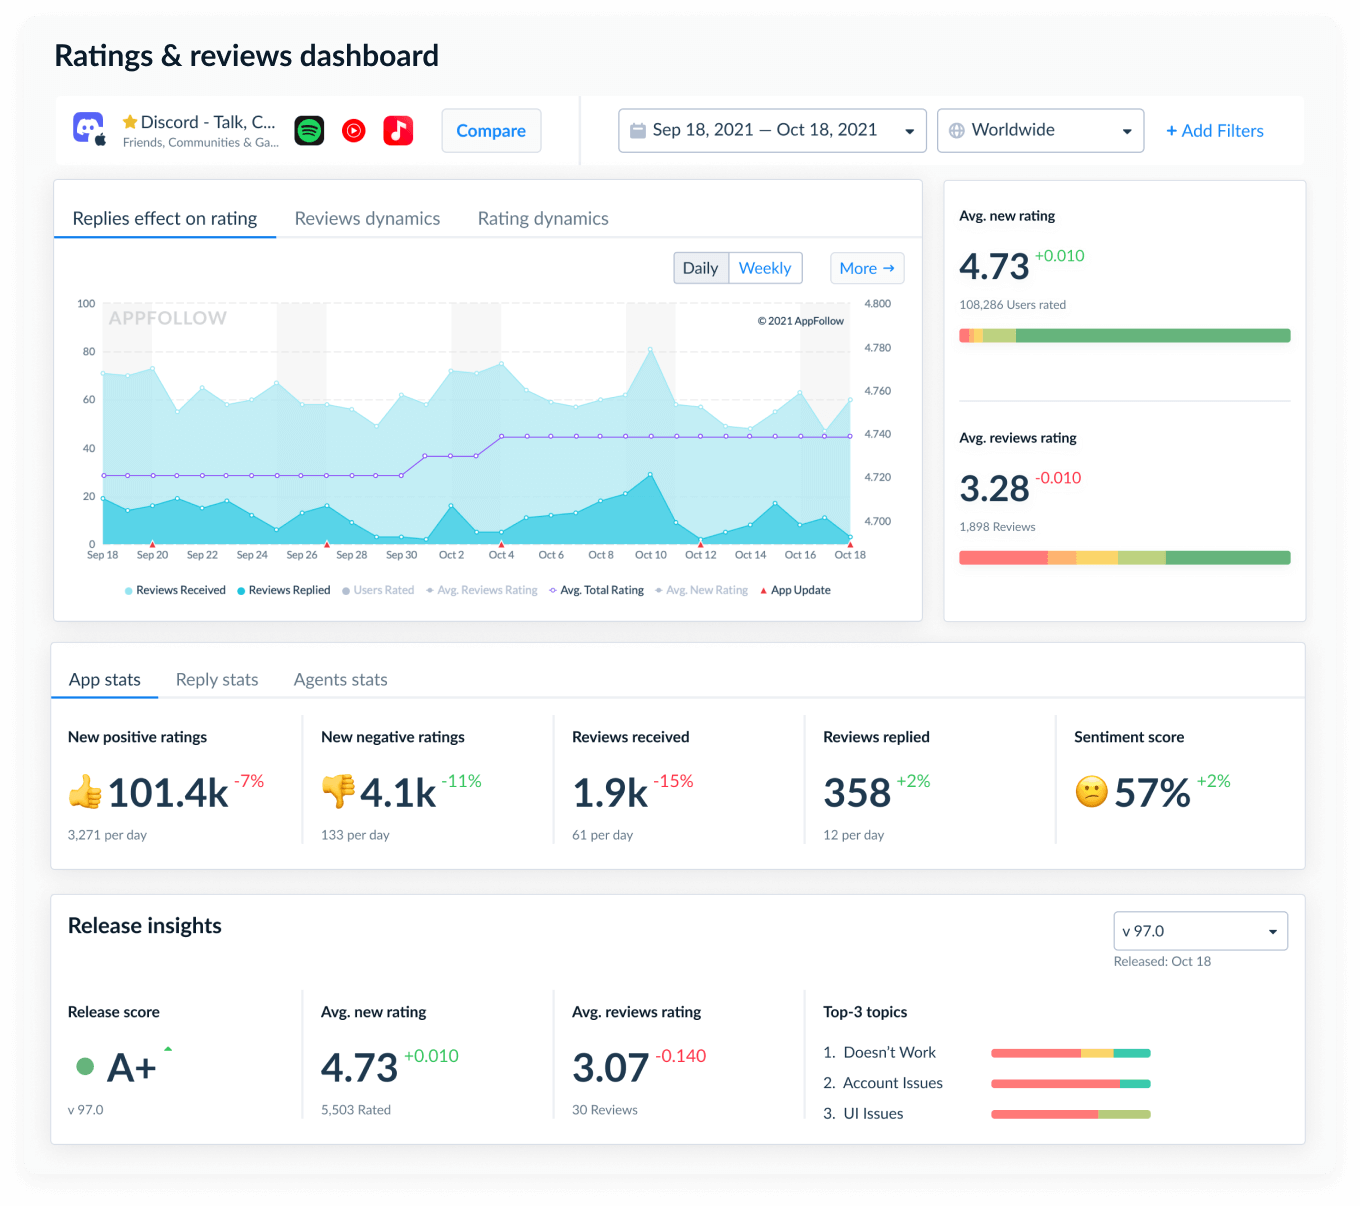 Reviews monitoring & analysis